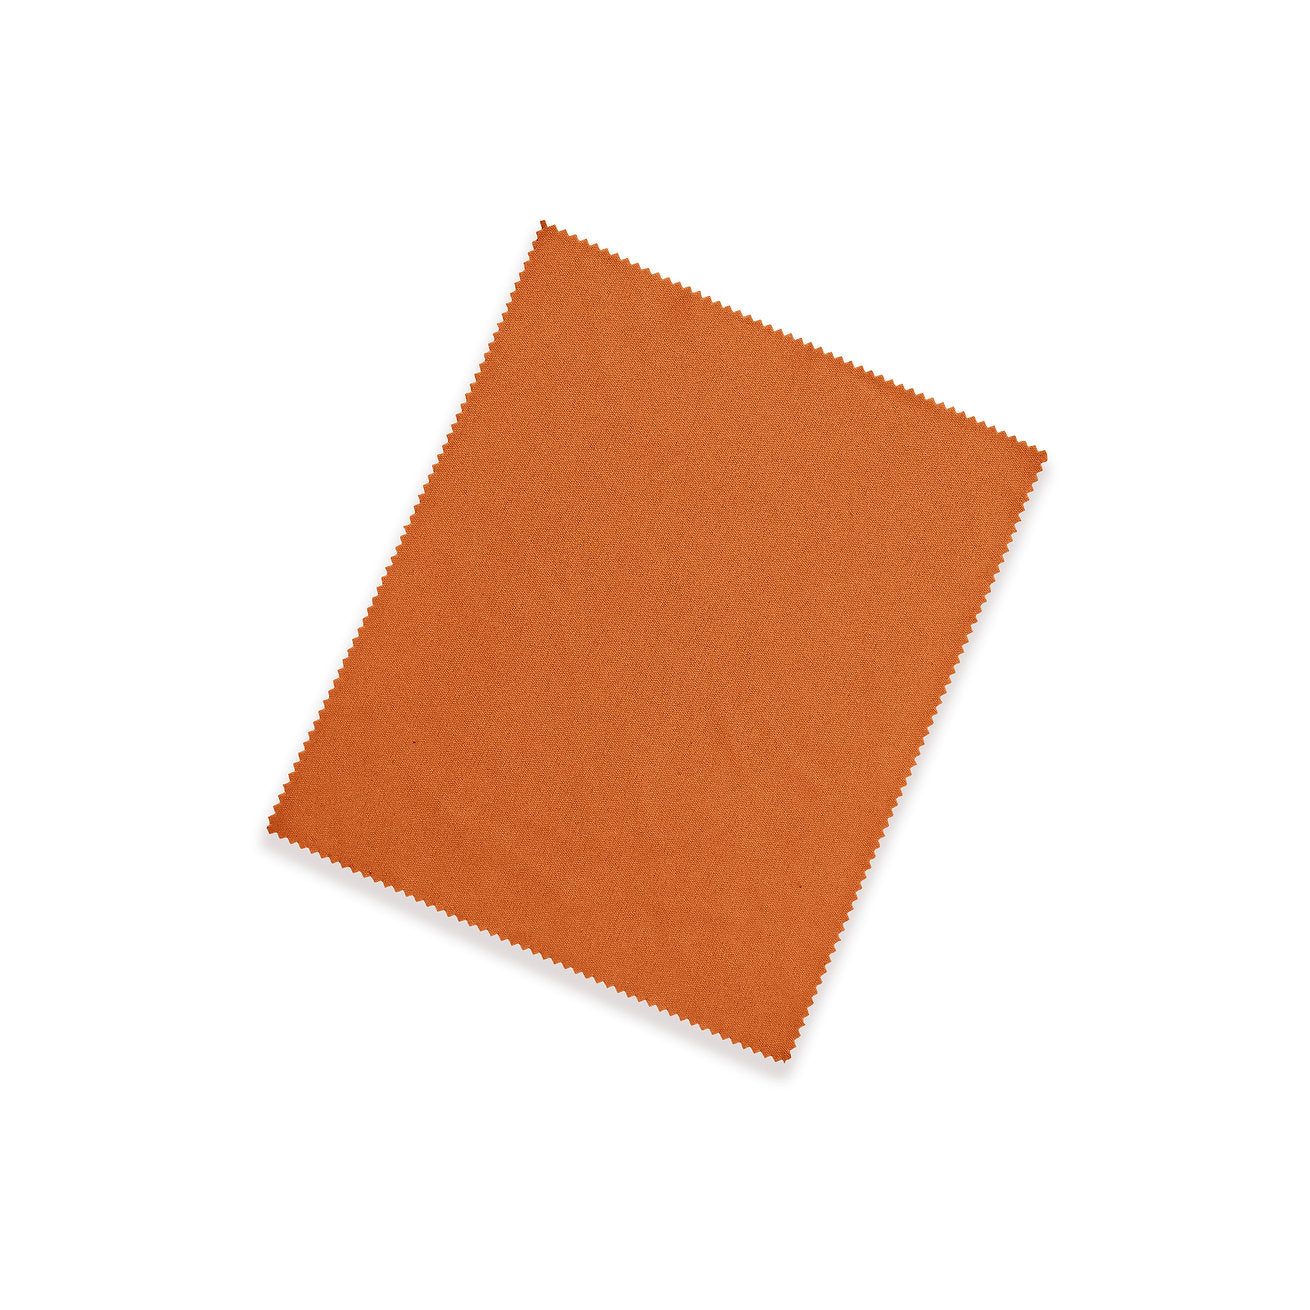 Orange microfiber cloth